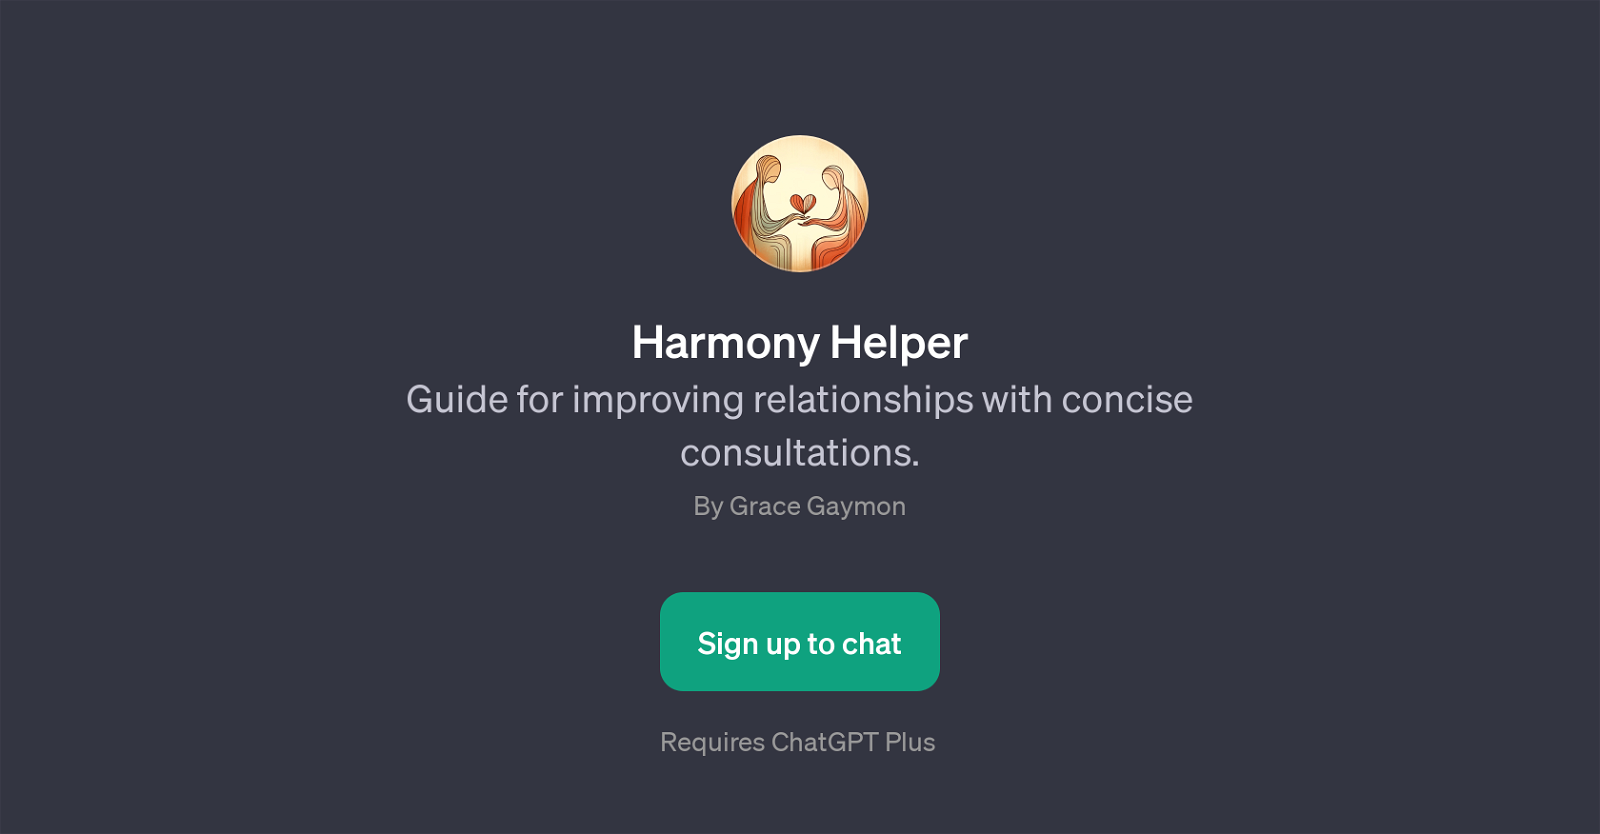 Harmony Helper website